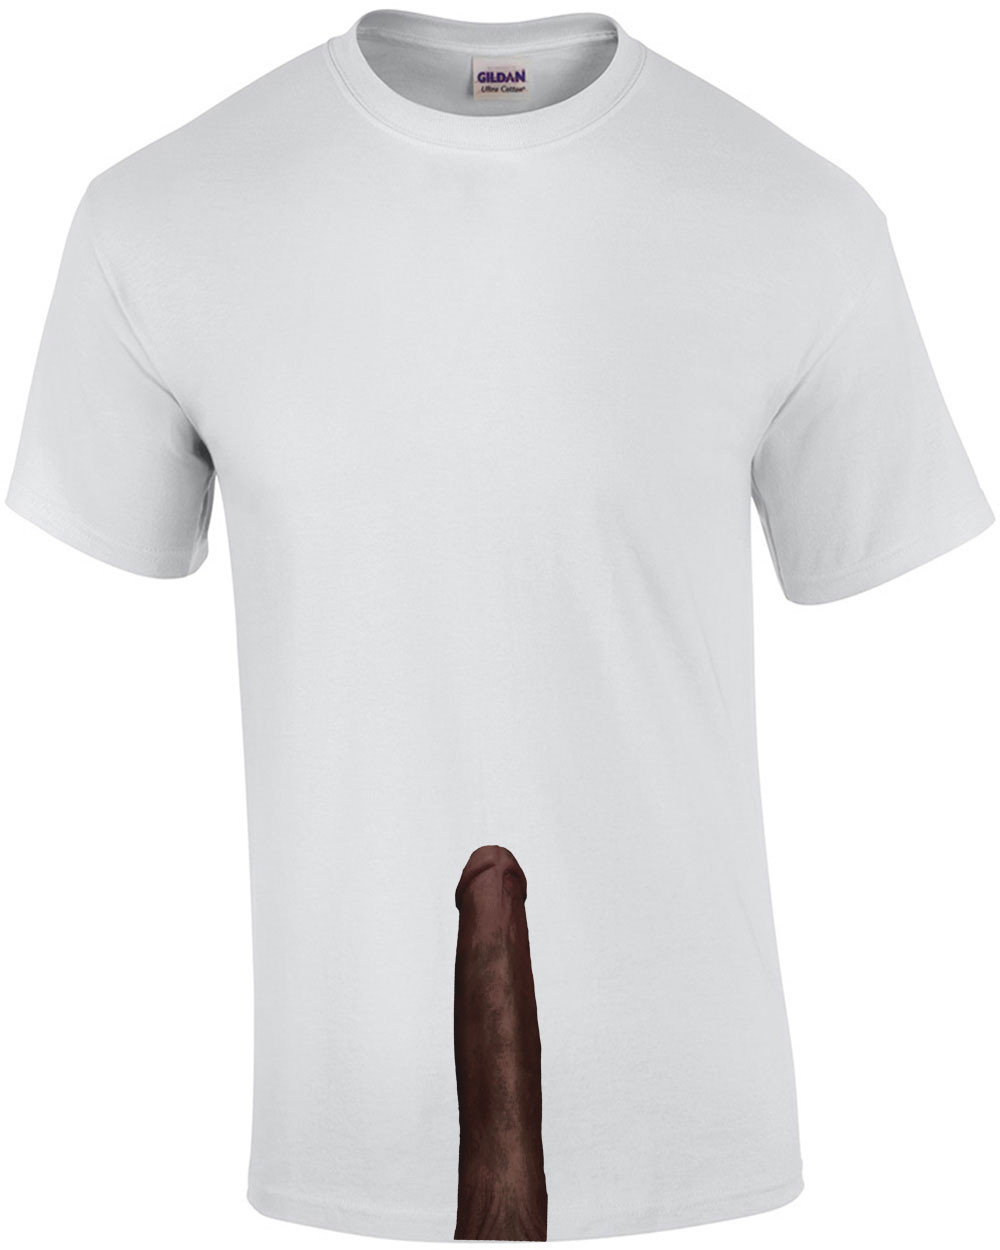 Penis On Shirt 62